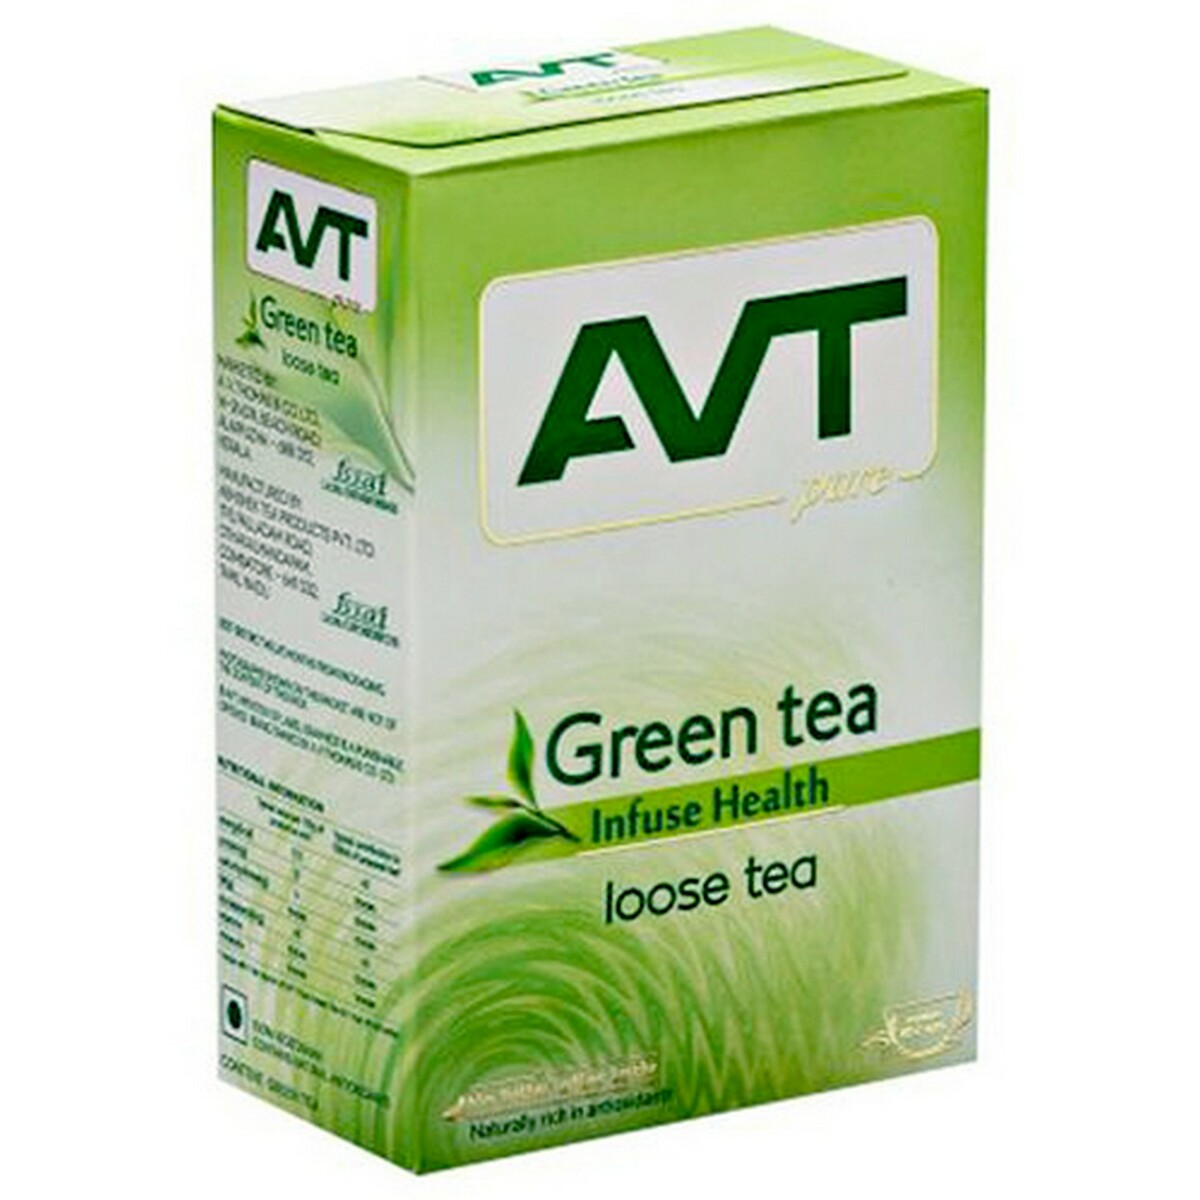 Avt Infuse Life Loose Green Tea 100g